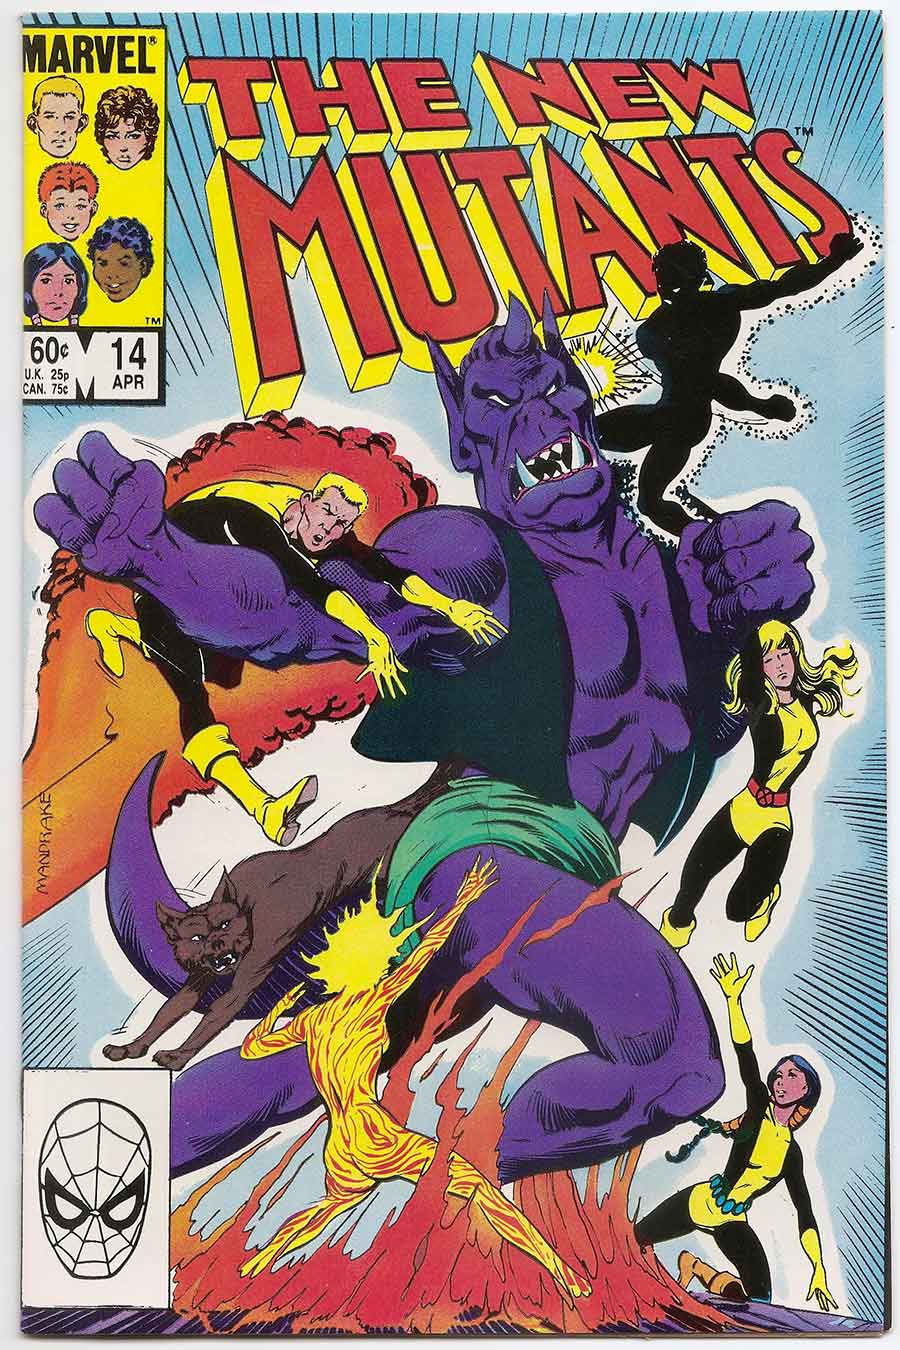 New Mutants #27 Preview: Magik Makes a Friend